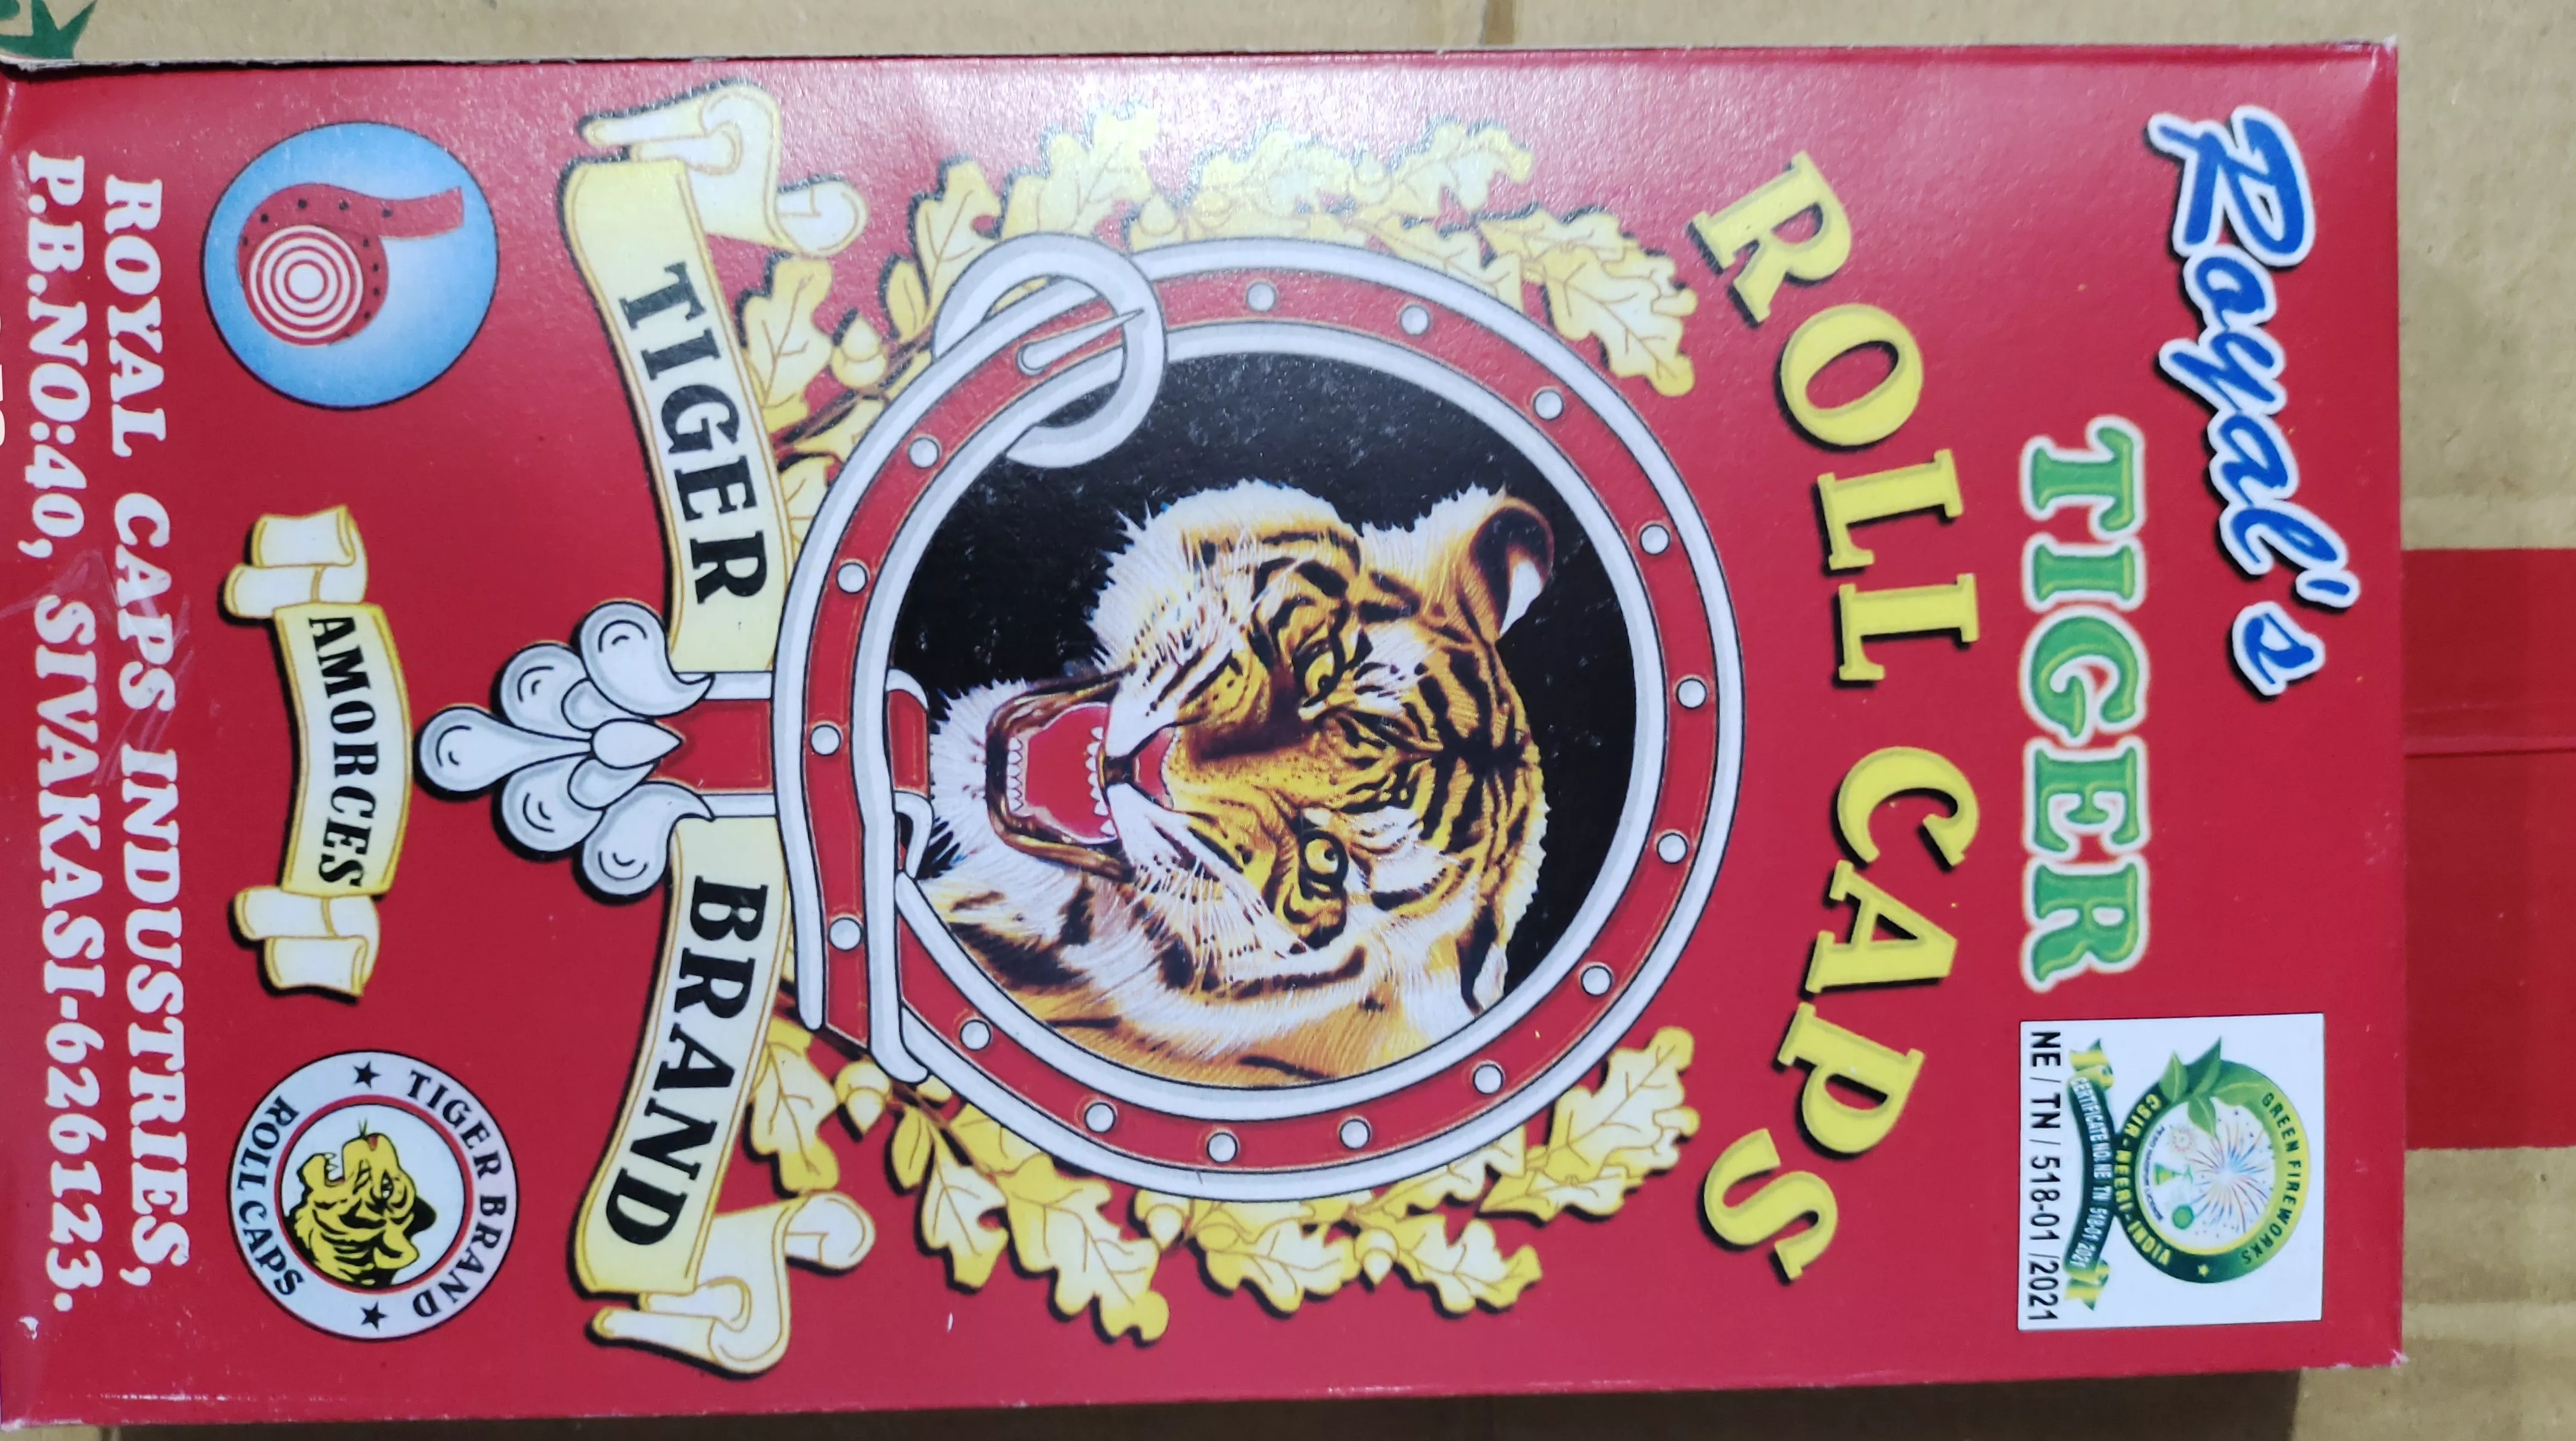 Pétard Le Tigre - Lady Cracker